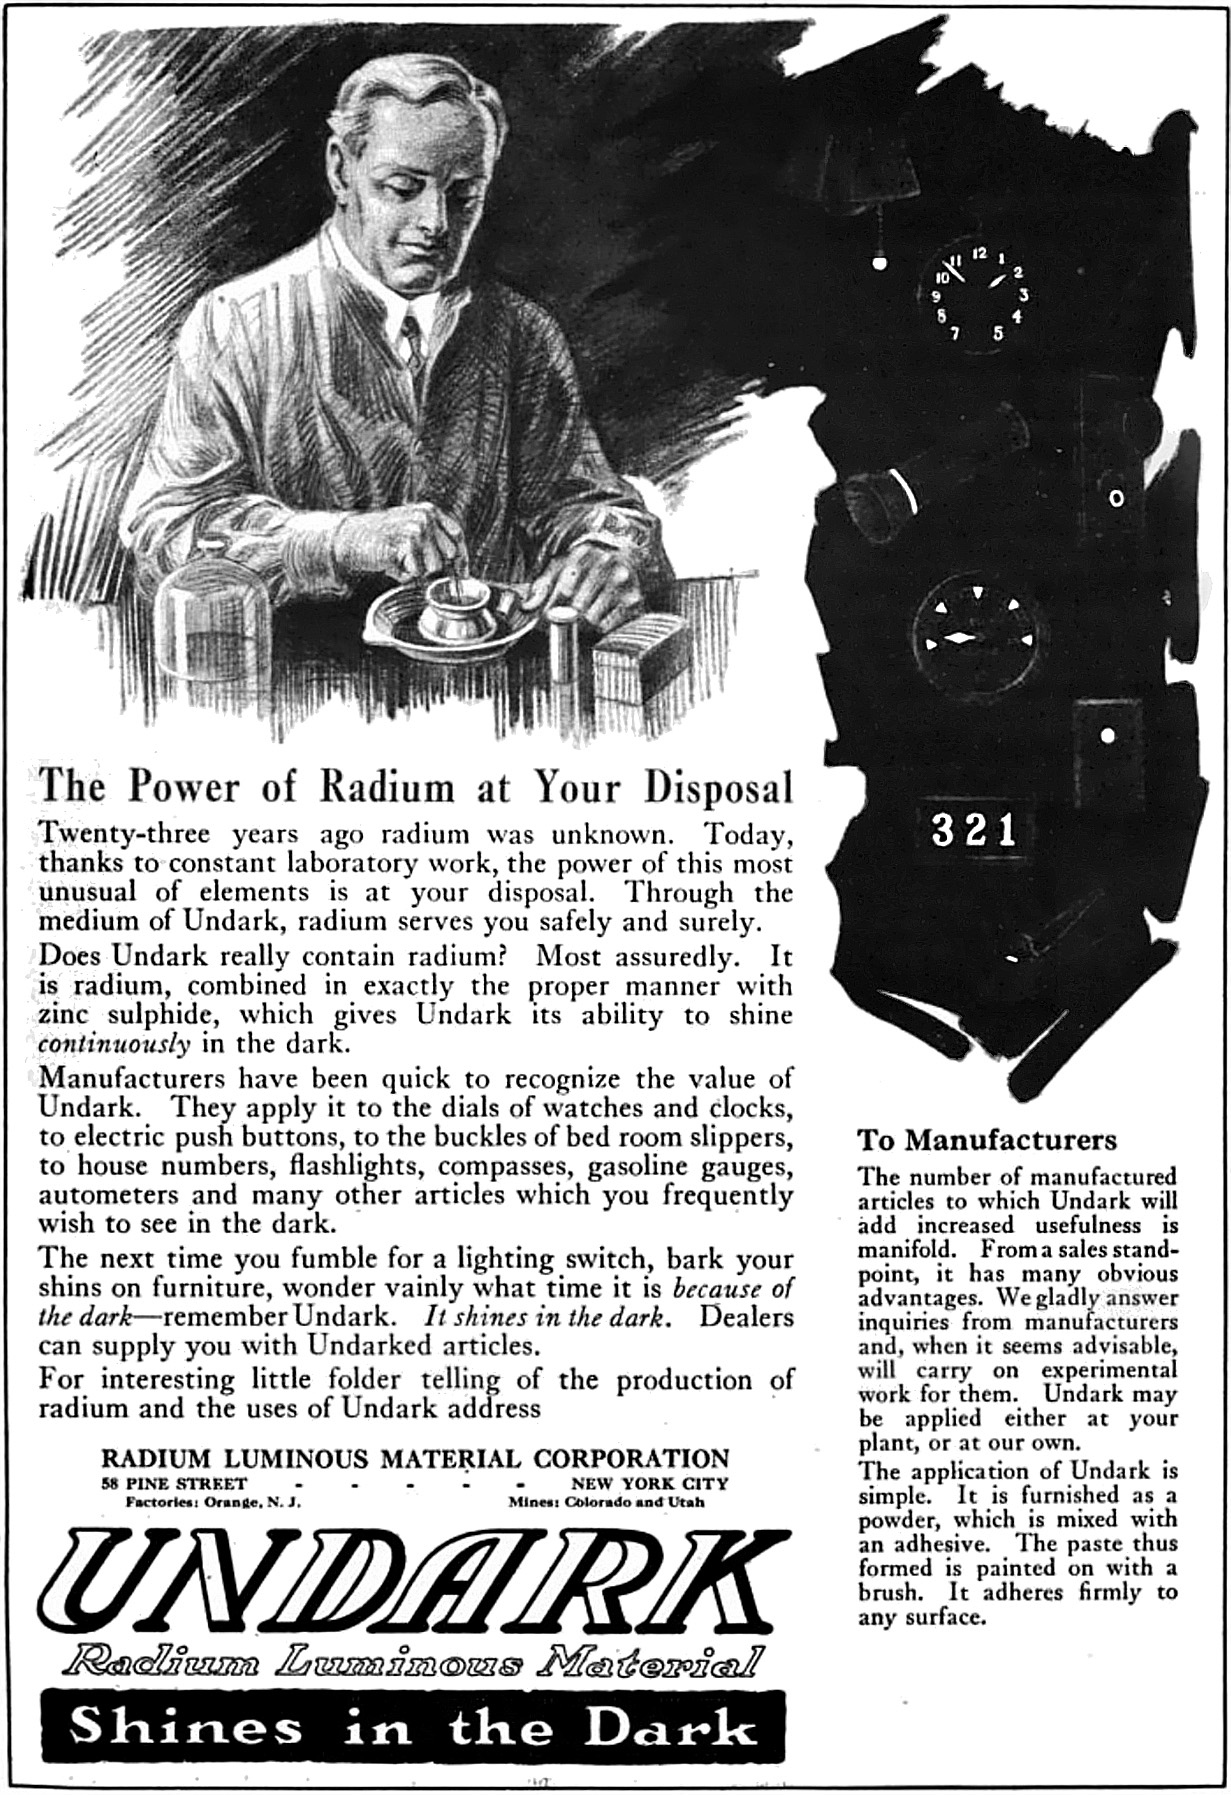 1921 magazine advertisement for Undark, a product of the Radium Luminous Material Corporation